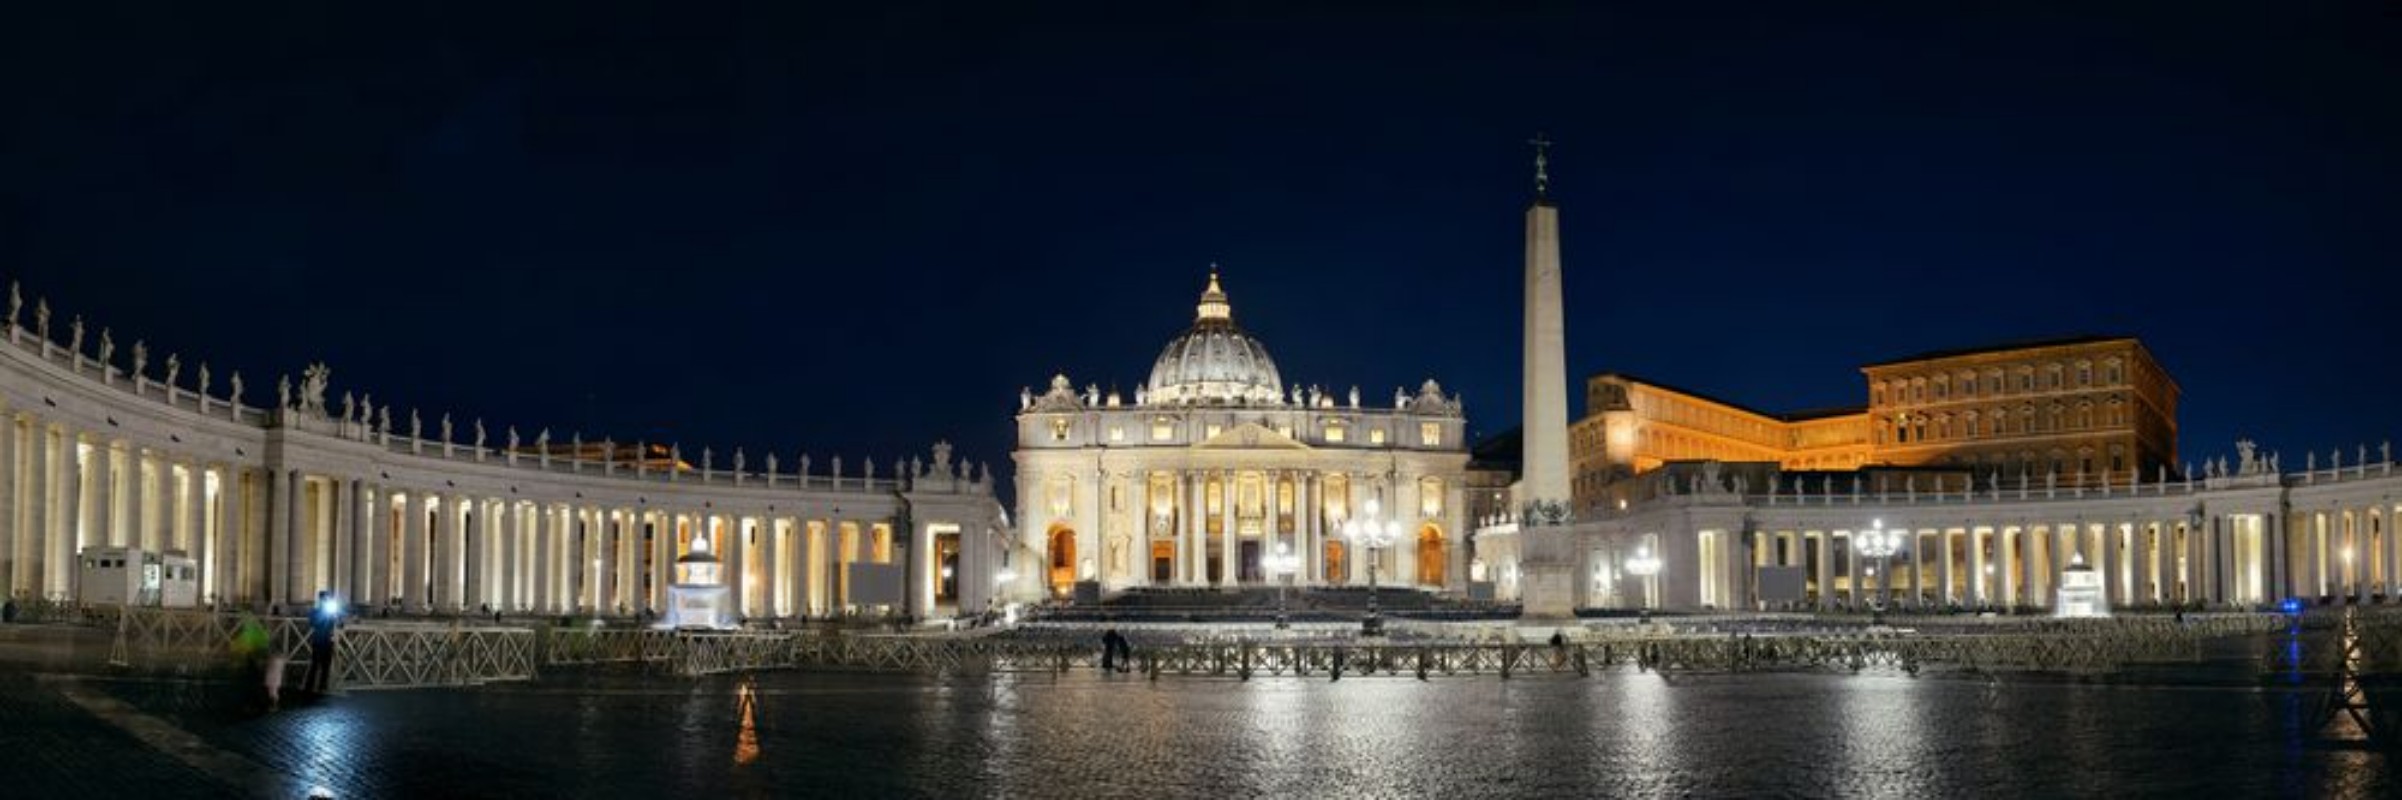 Image de St Peters Basilica at night panorama